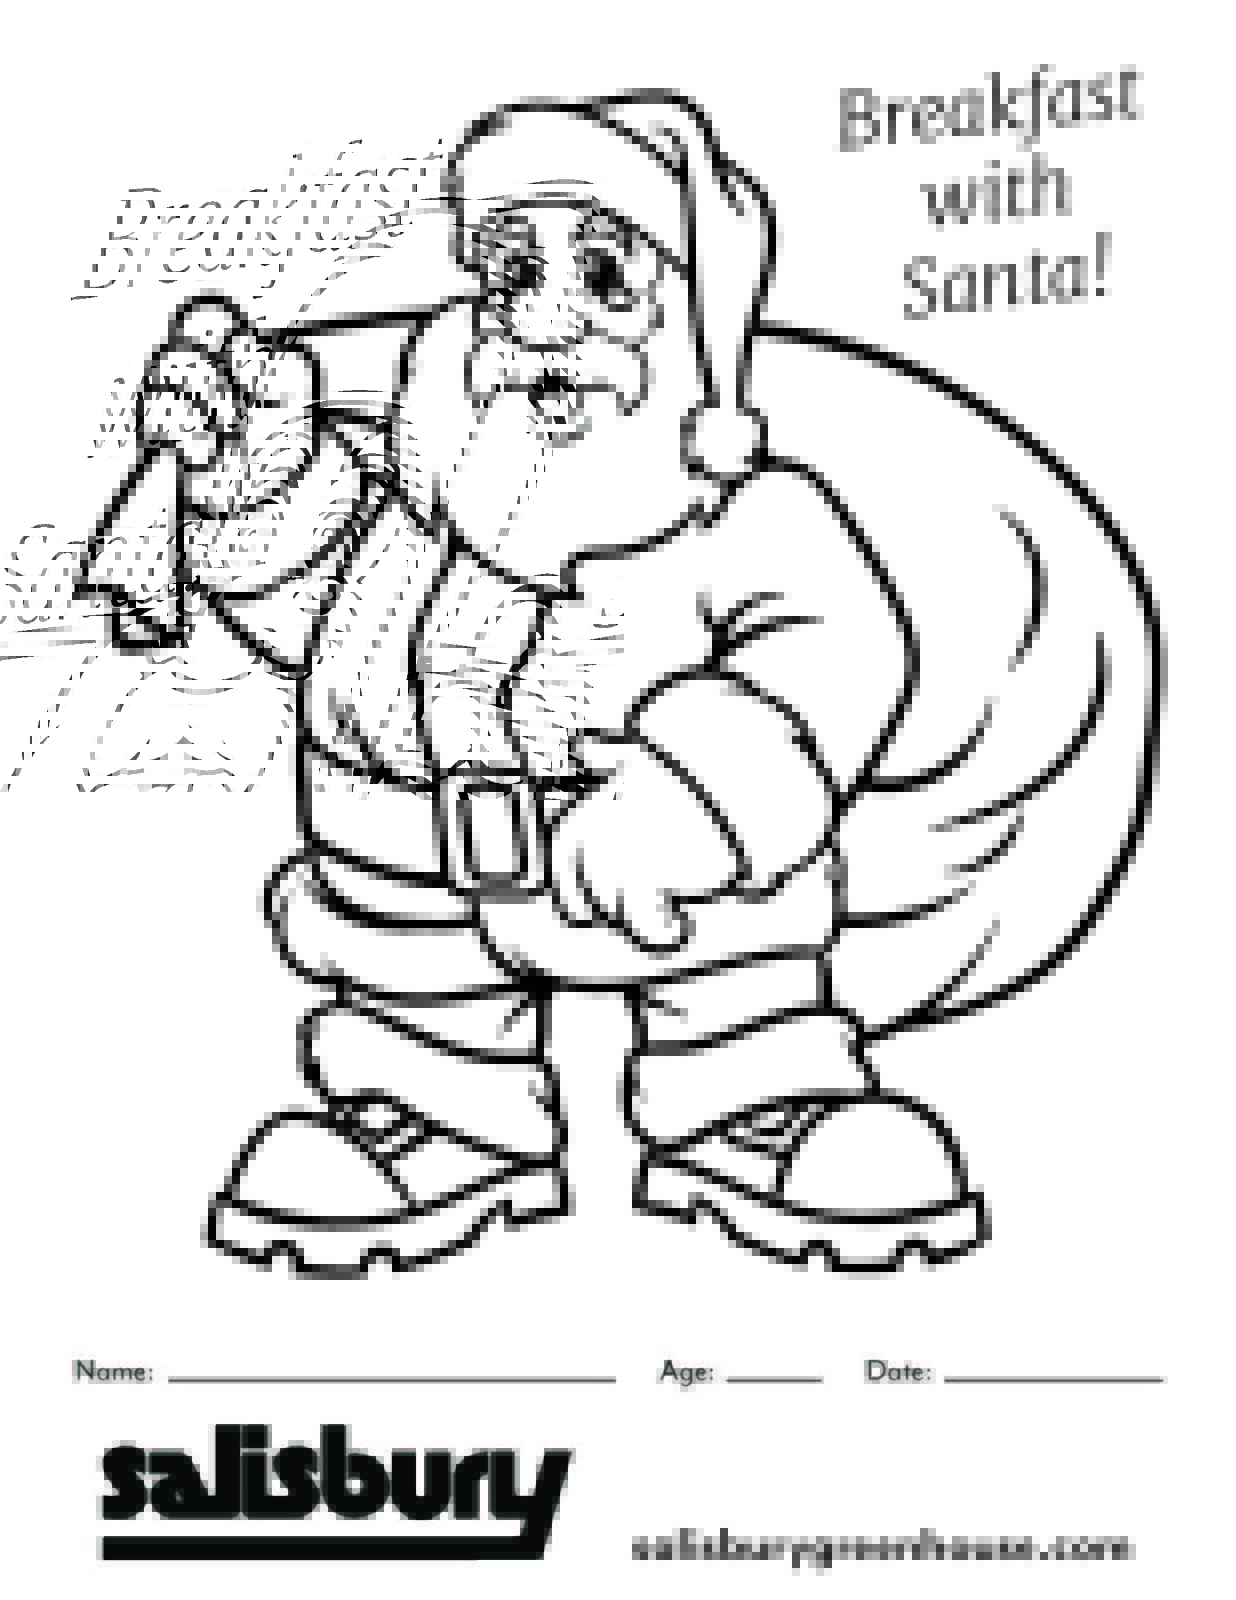 Santa with bag Colouring Sheet | Salisbury Greenhouse - St. Albert, Sherwood Park